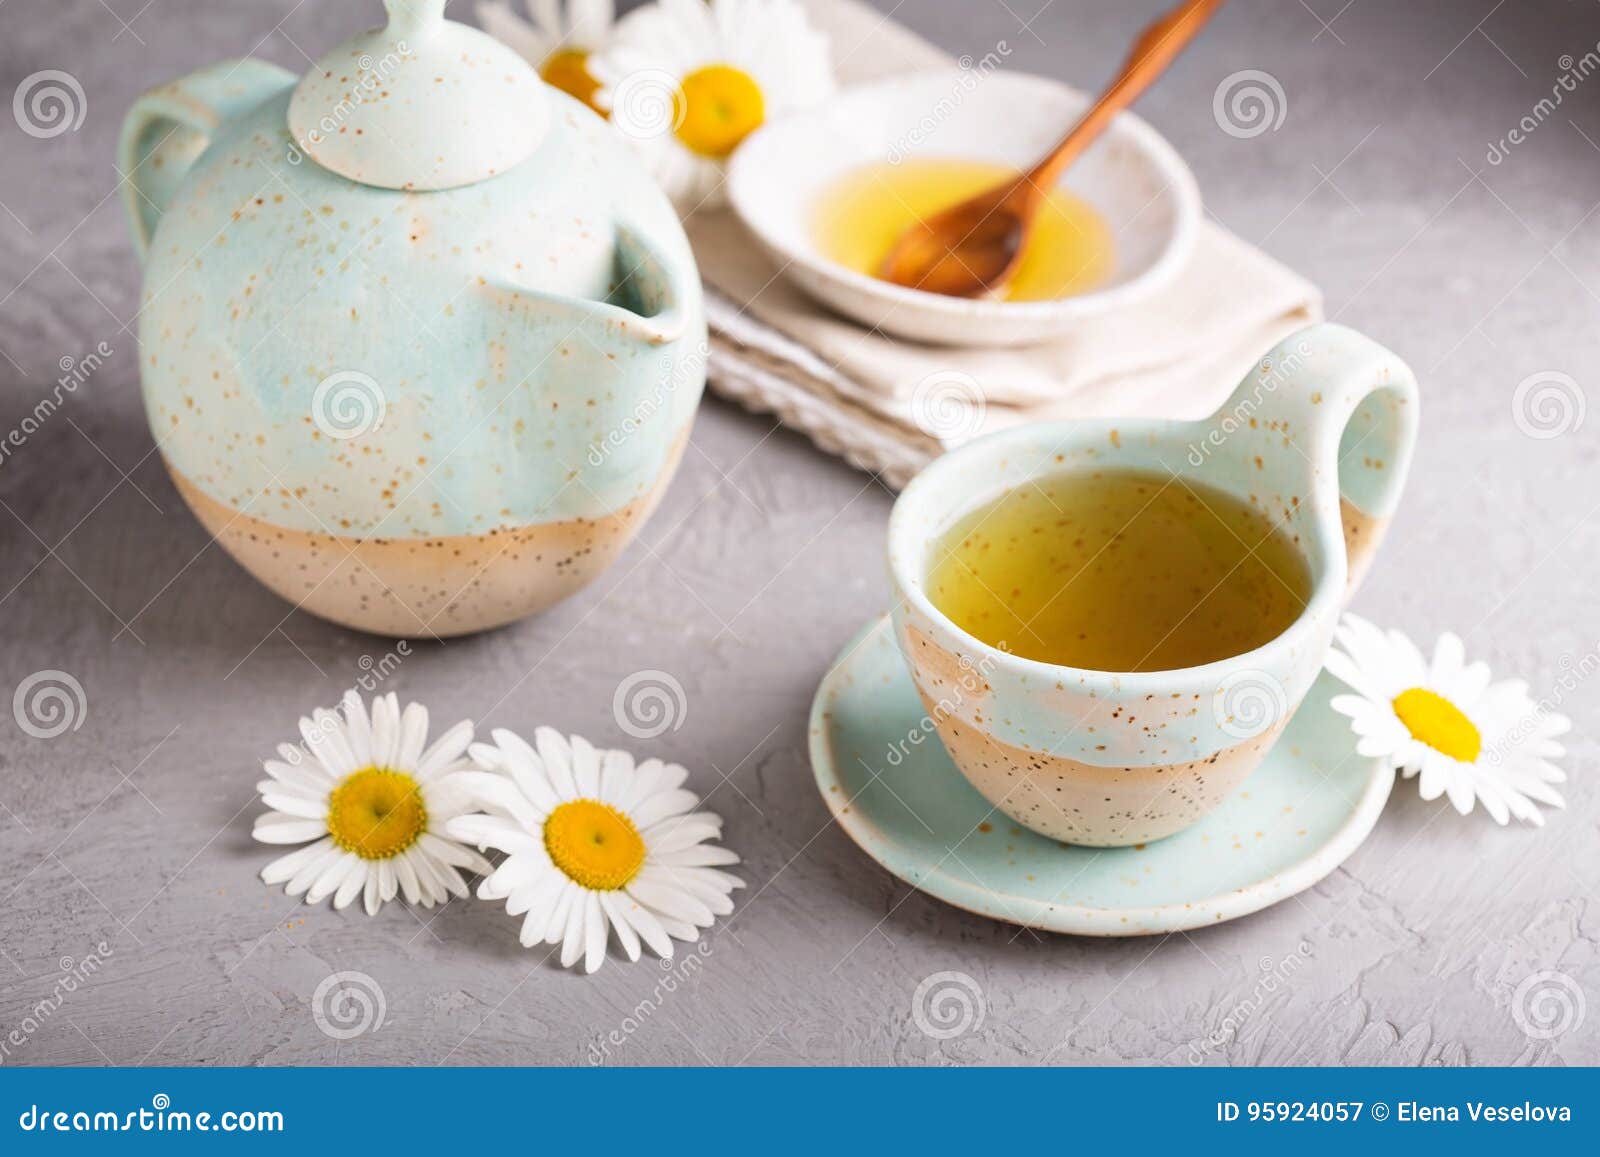 camomille tea in handmade ceramic cup